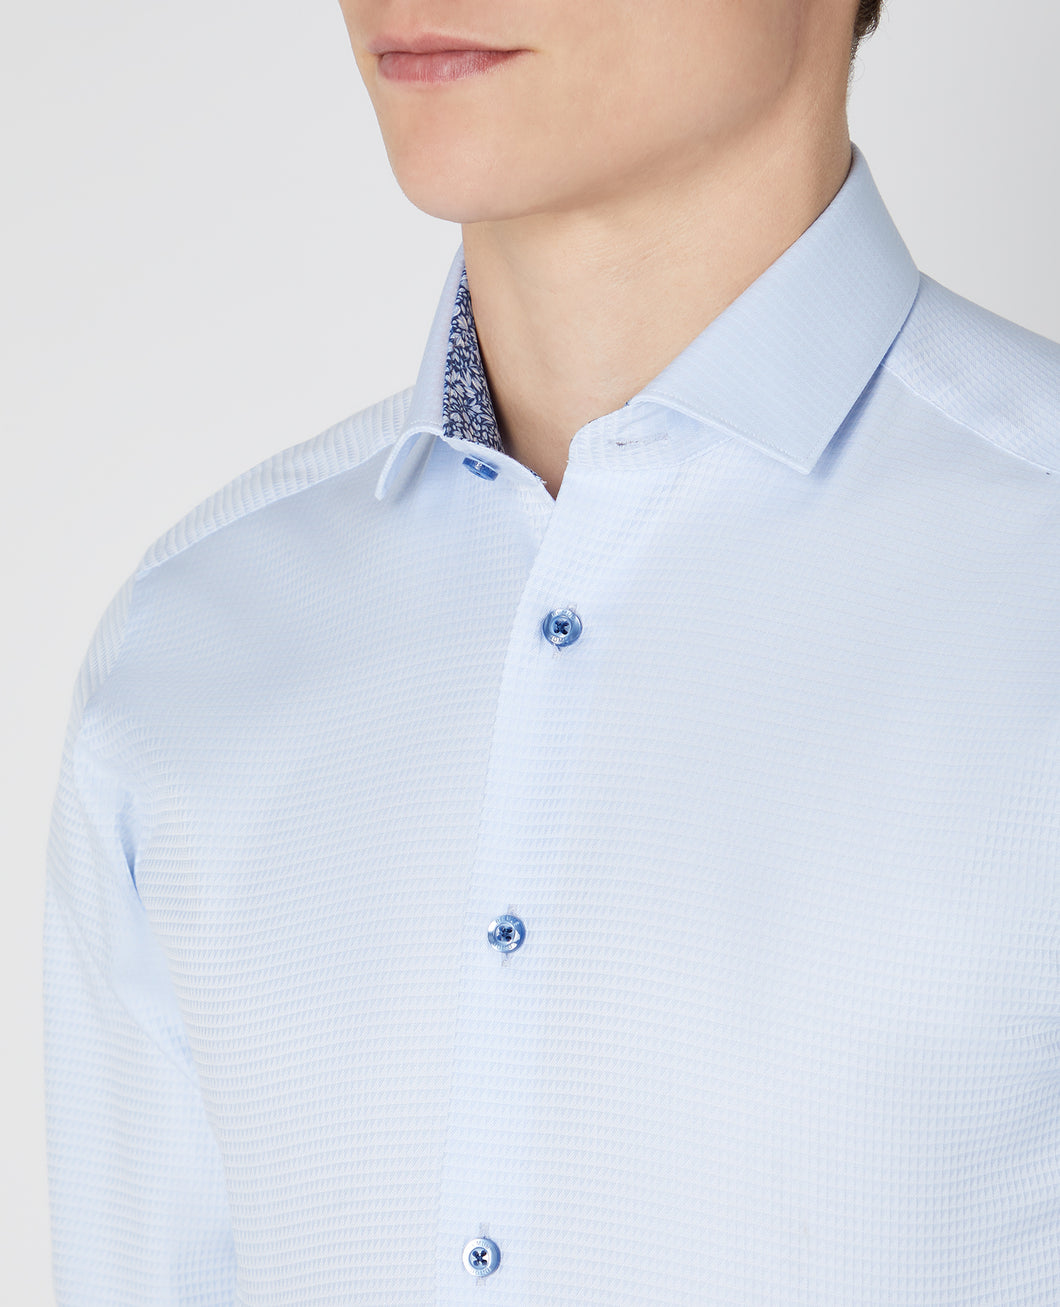 Remus Uomo Textured Plain Shirt Light Blue